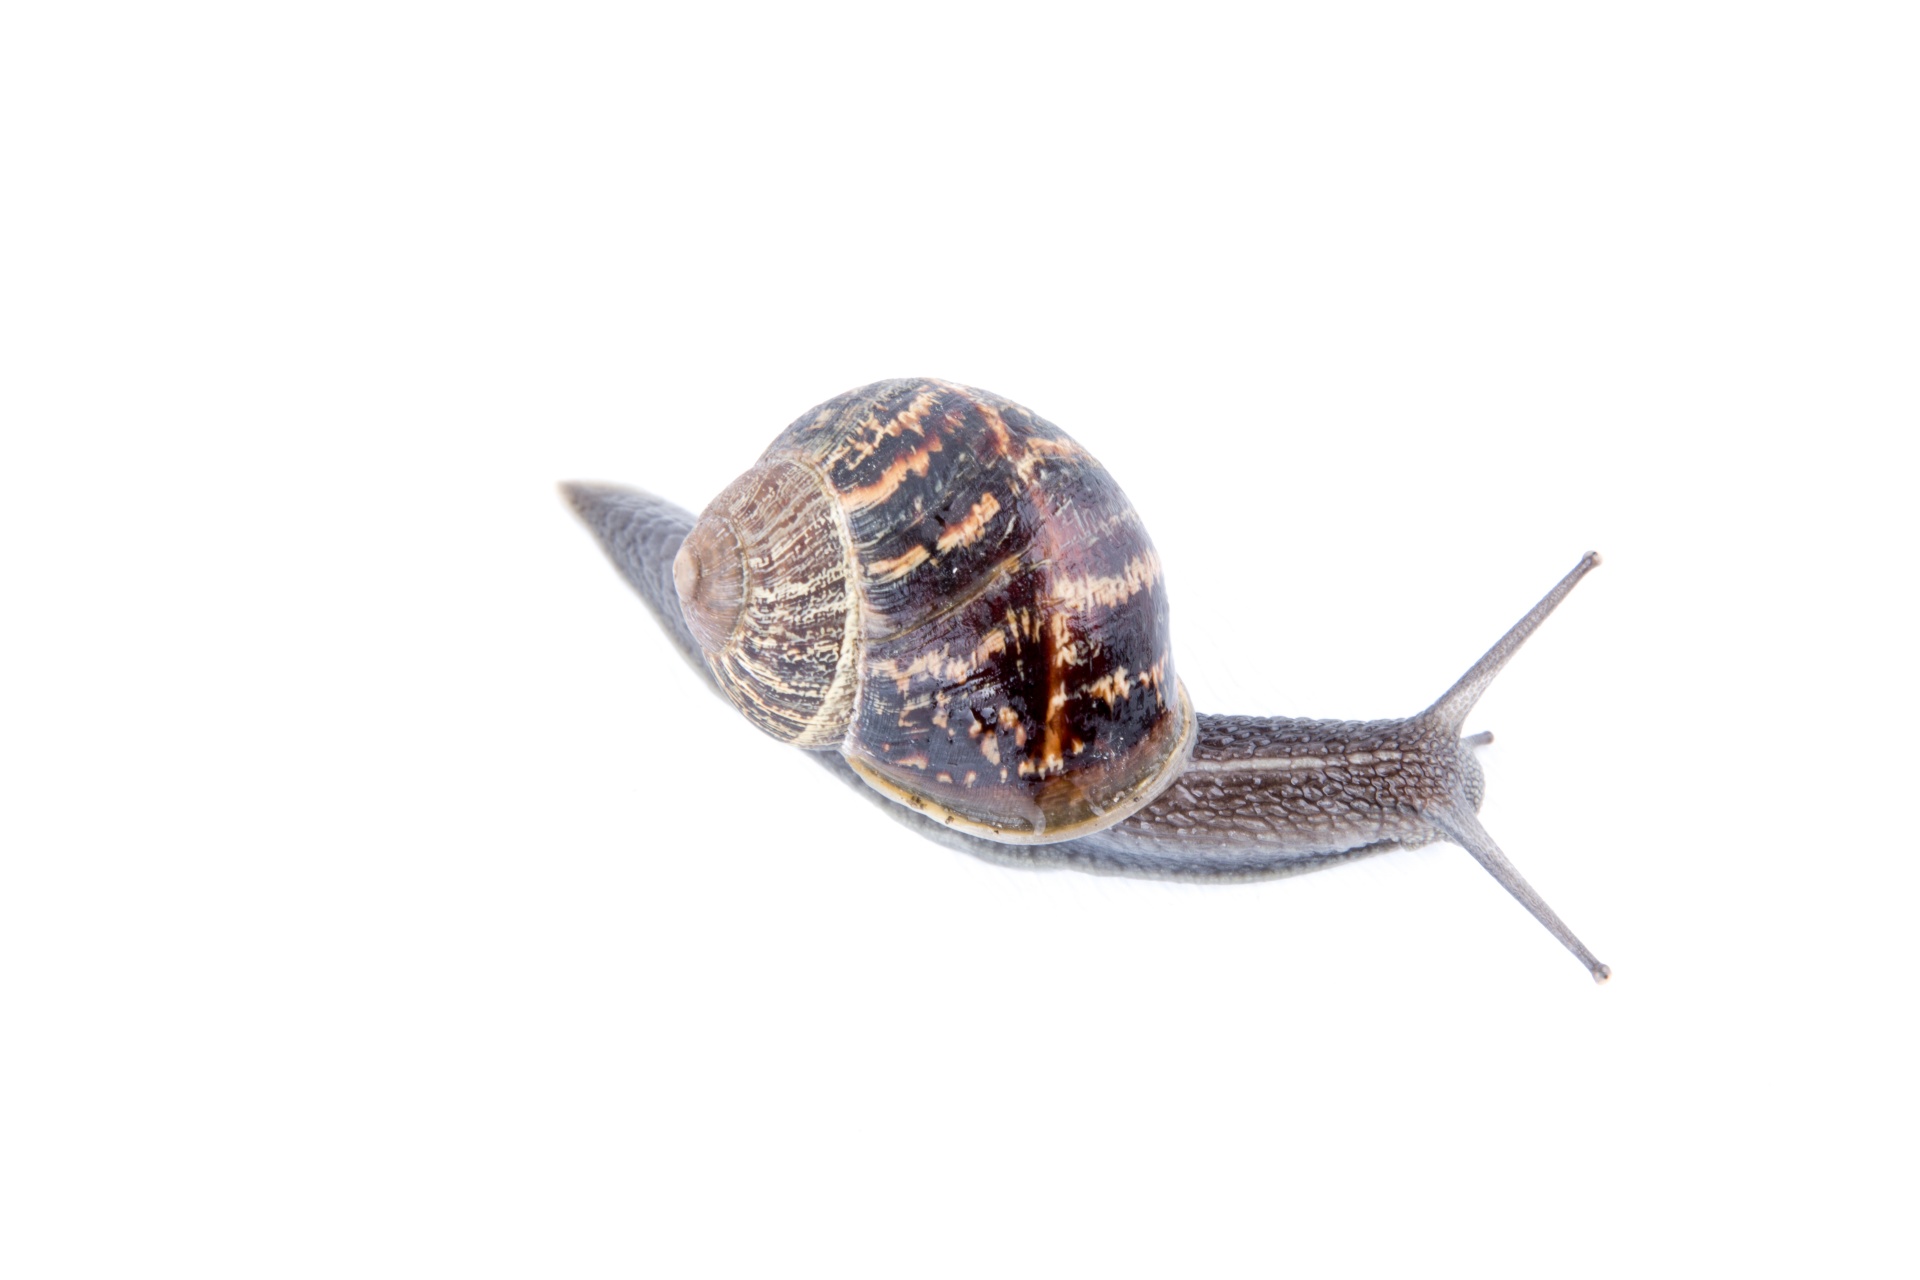 Striped snail on white background